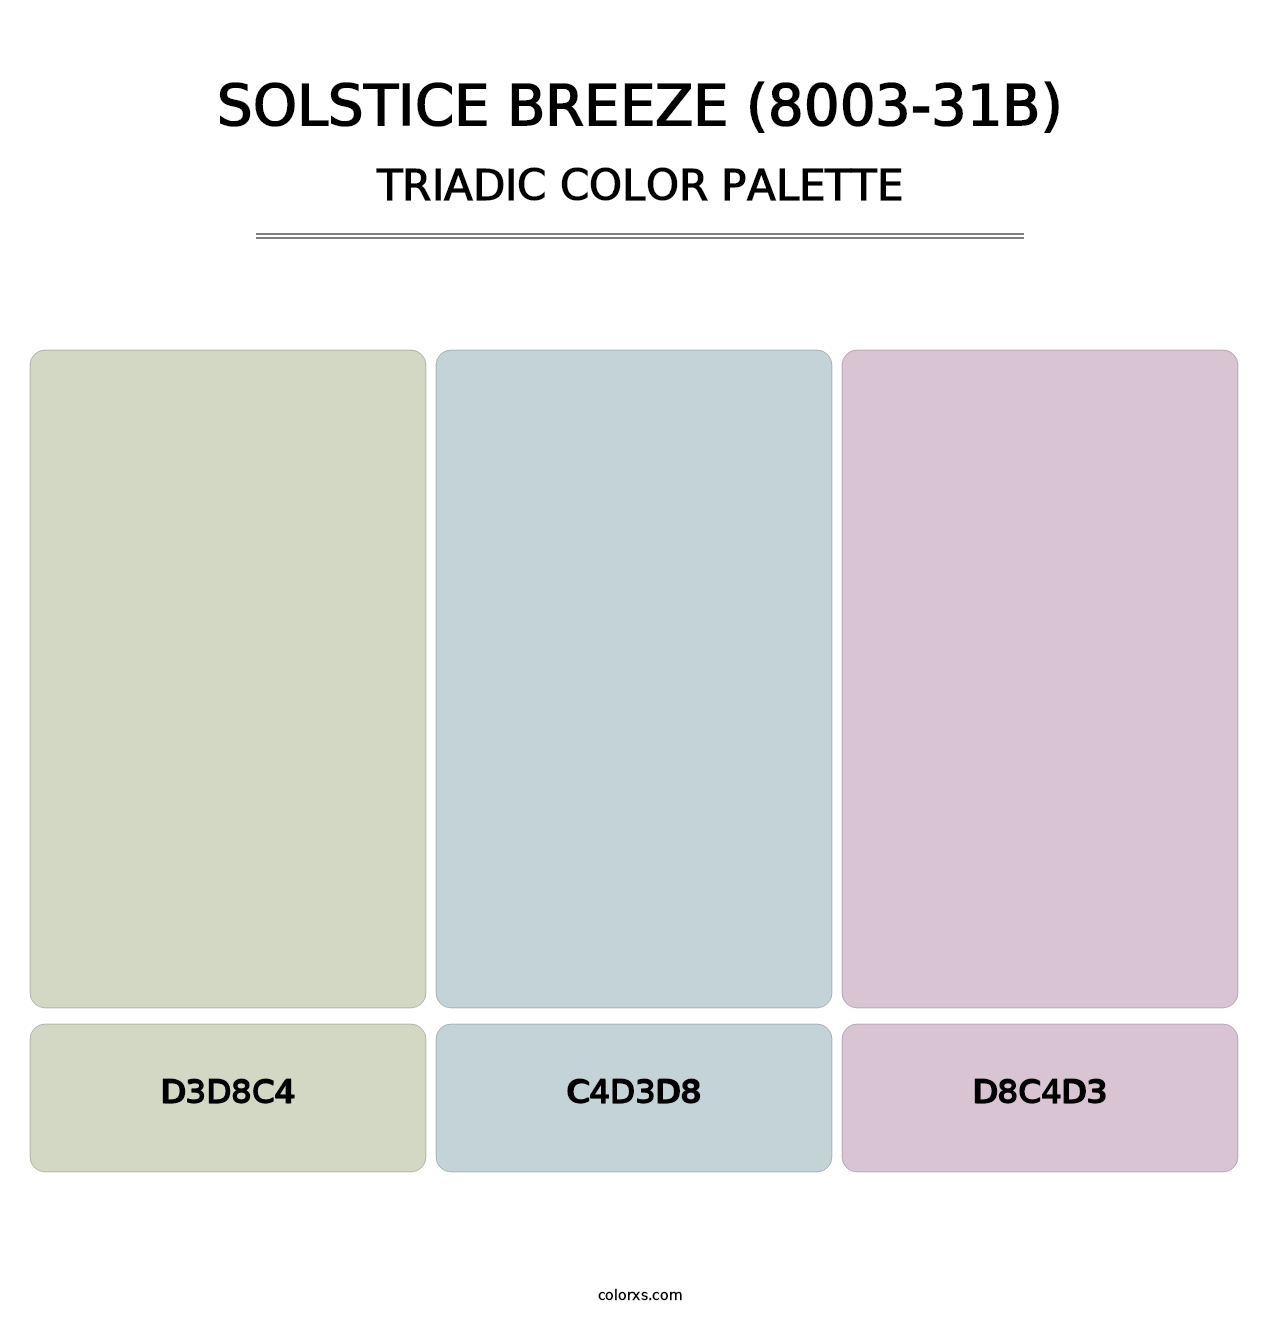 Solstice Breeze (8003-31B) - Triadic Color Palette